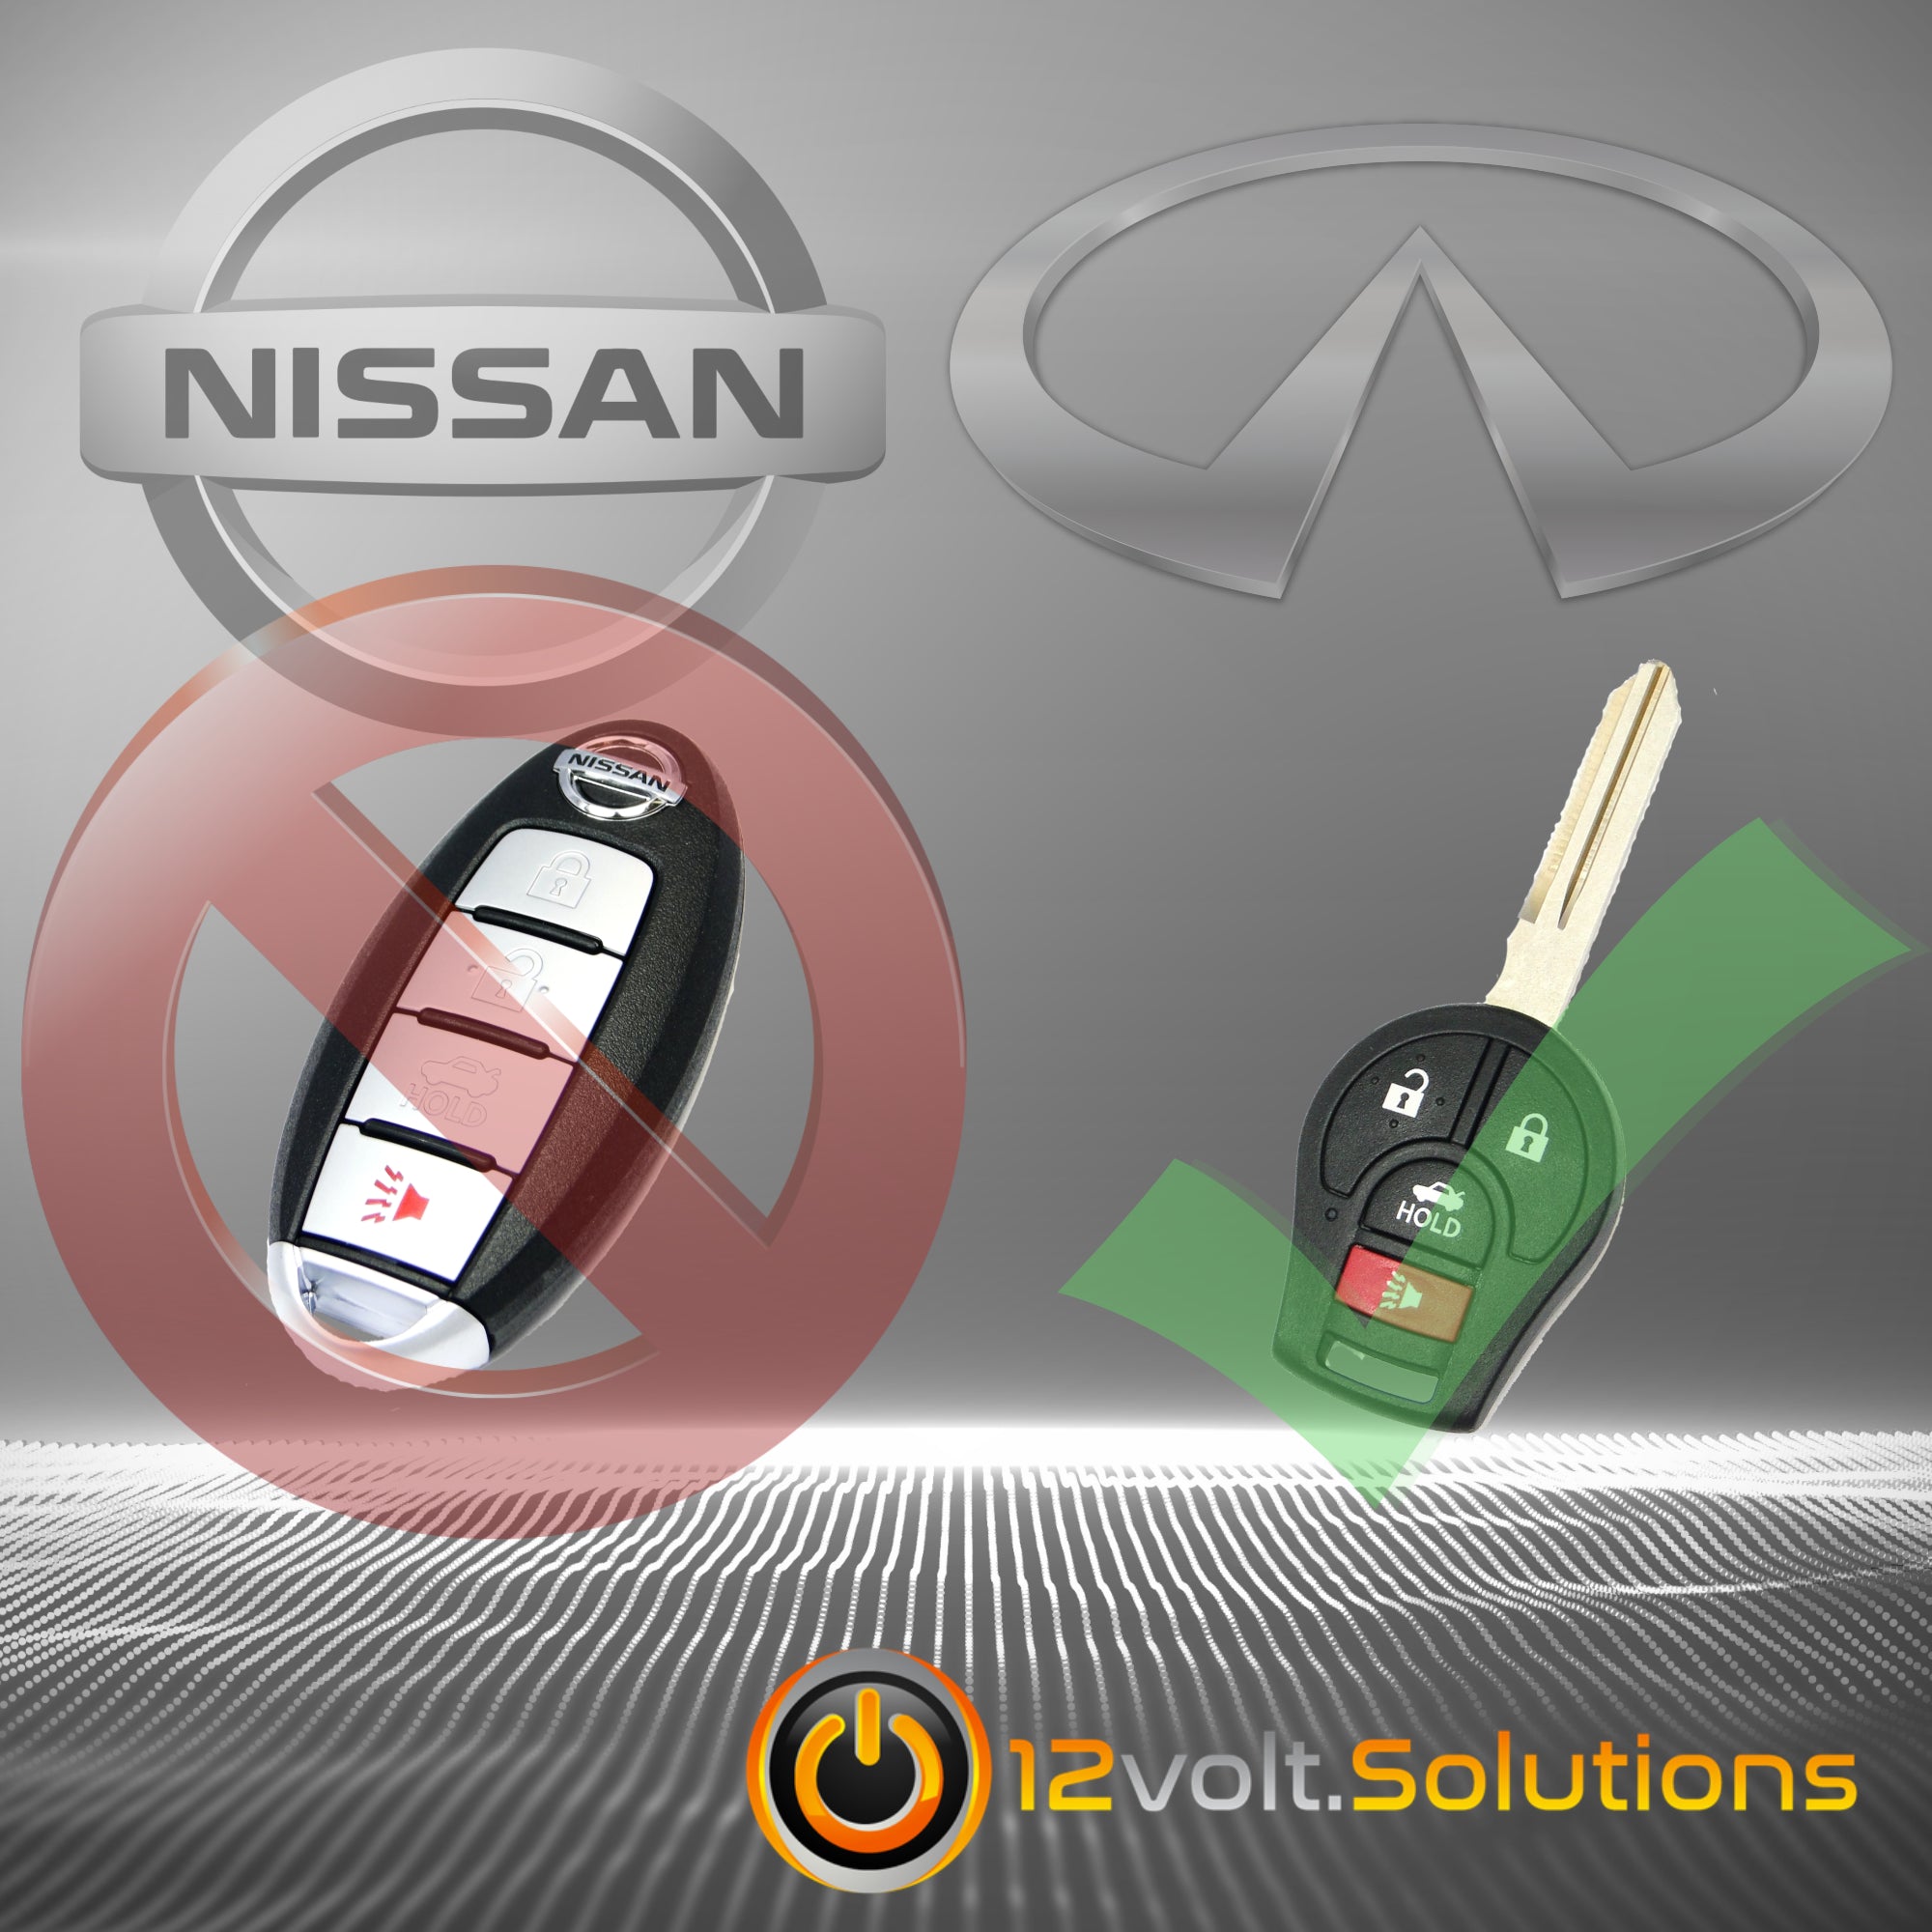 2012-2021 Nissan NV 1500/2500/3500 VAN Remote Start Plug and Play Kit (Standard Key)-12Volt.Solutions